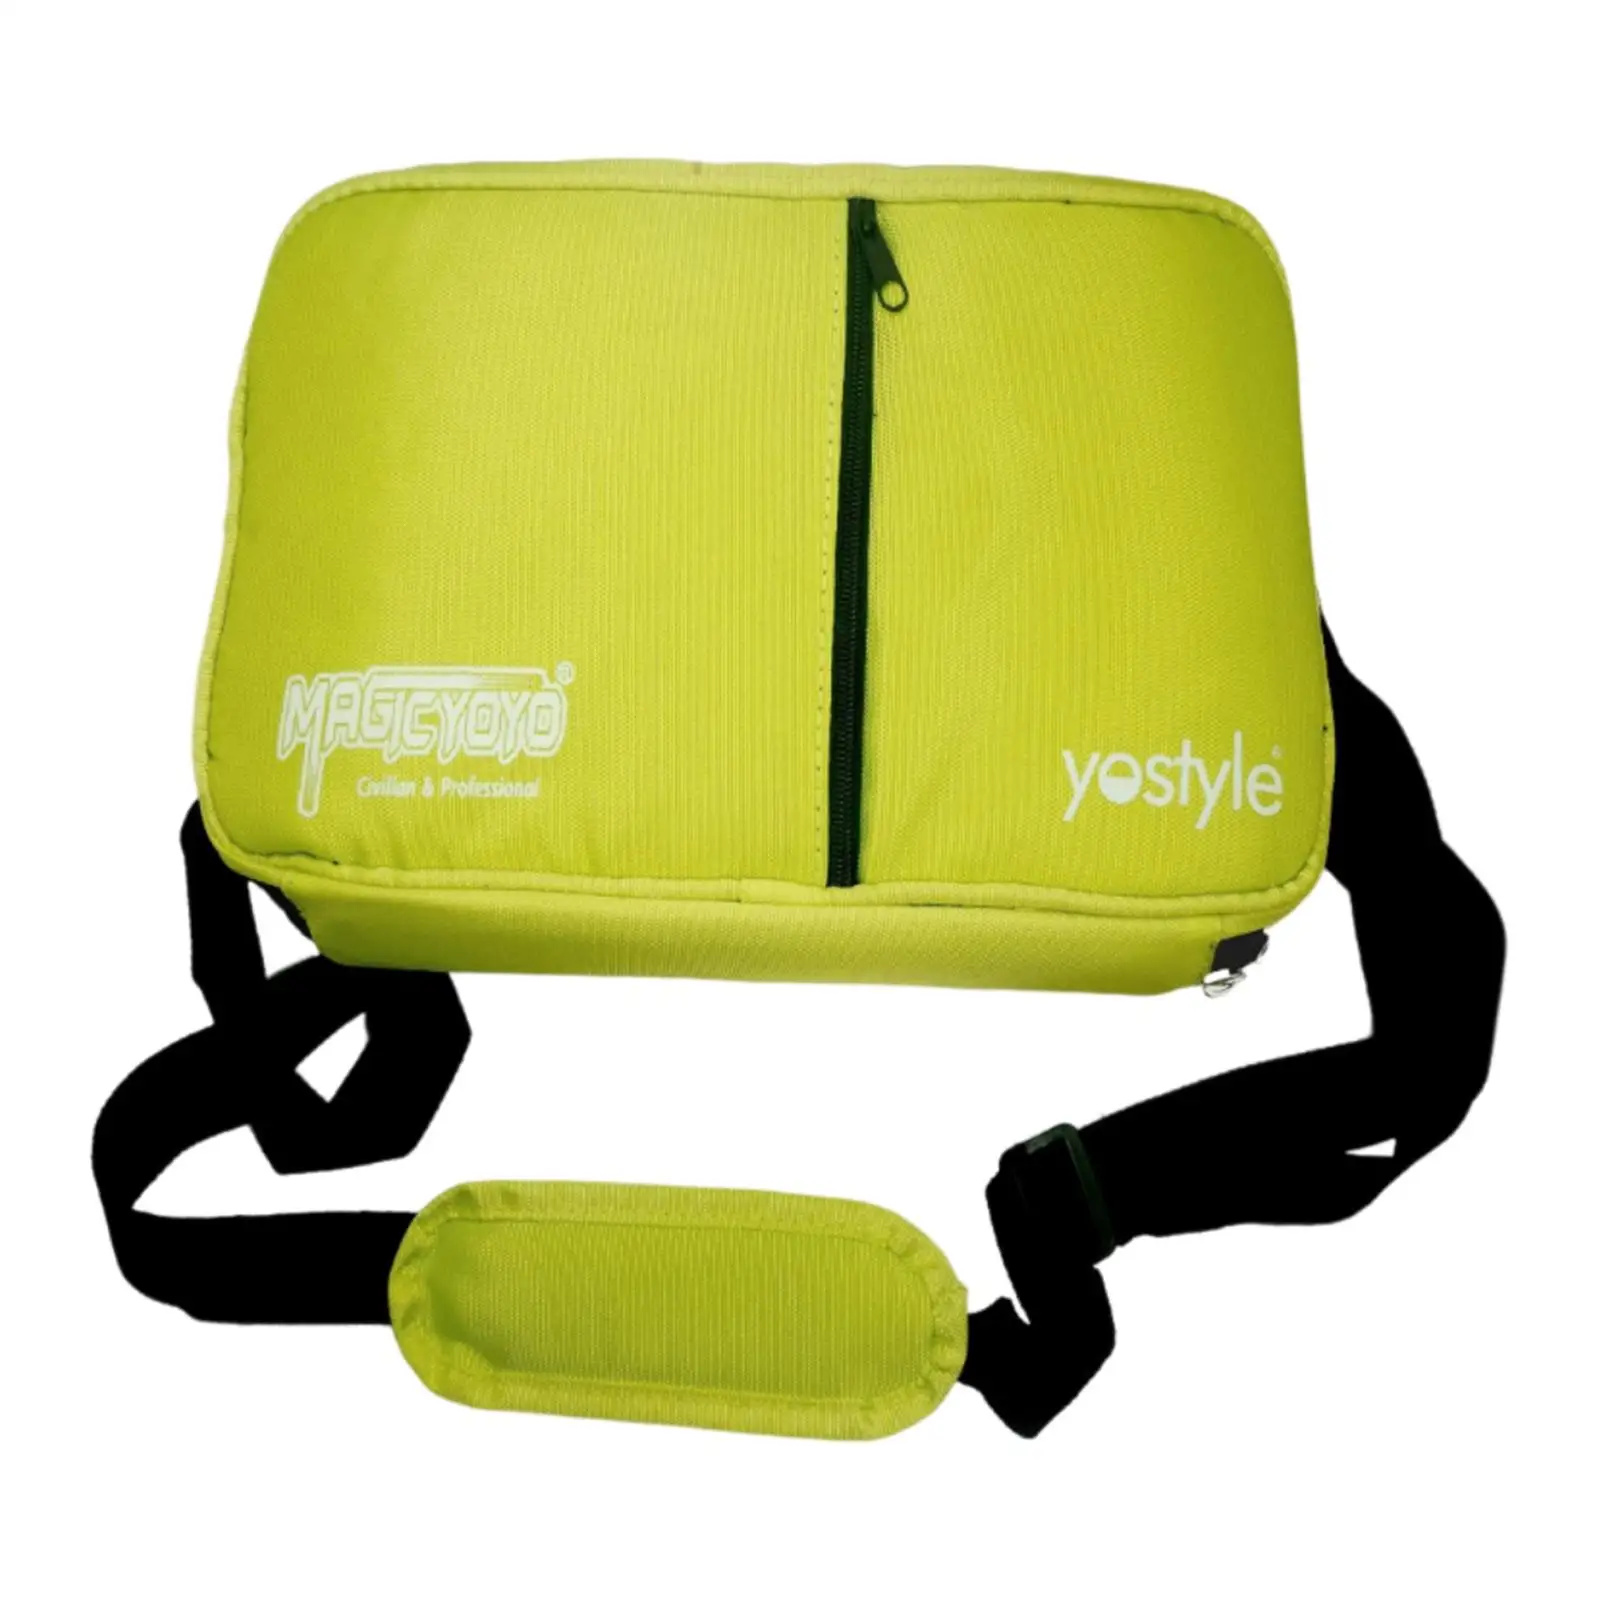 Yoyo Carrying Bag Portable Yoyo Collectors Bag for Sports Supplies Training